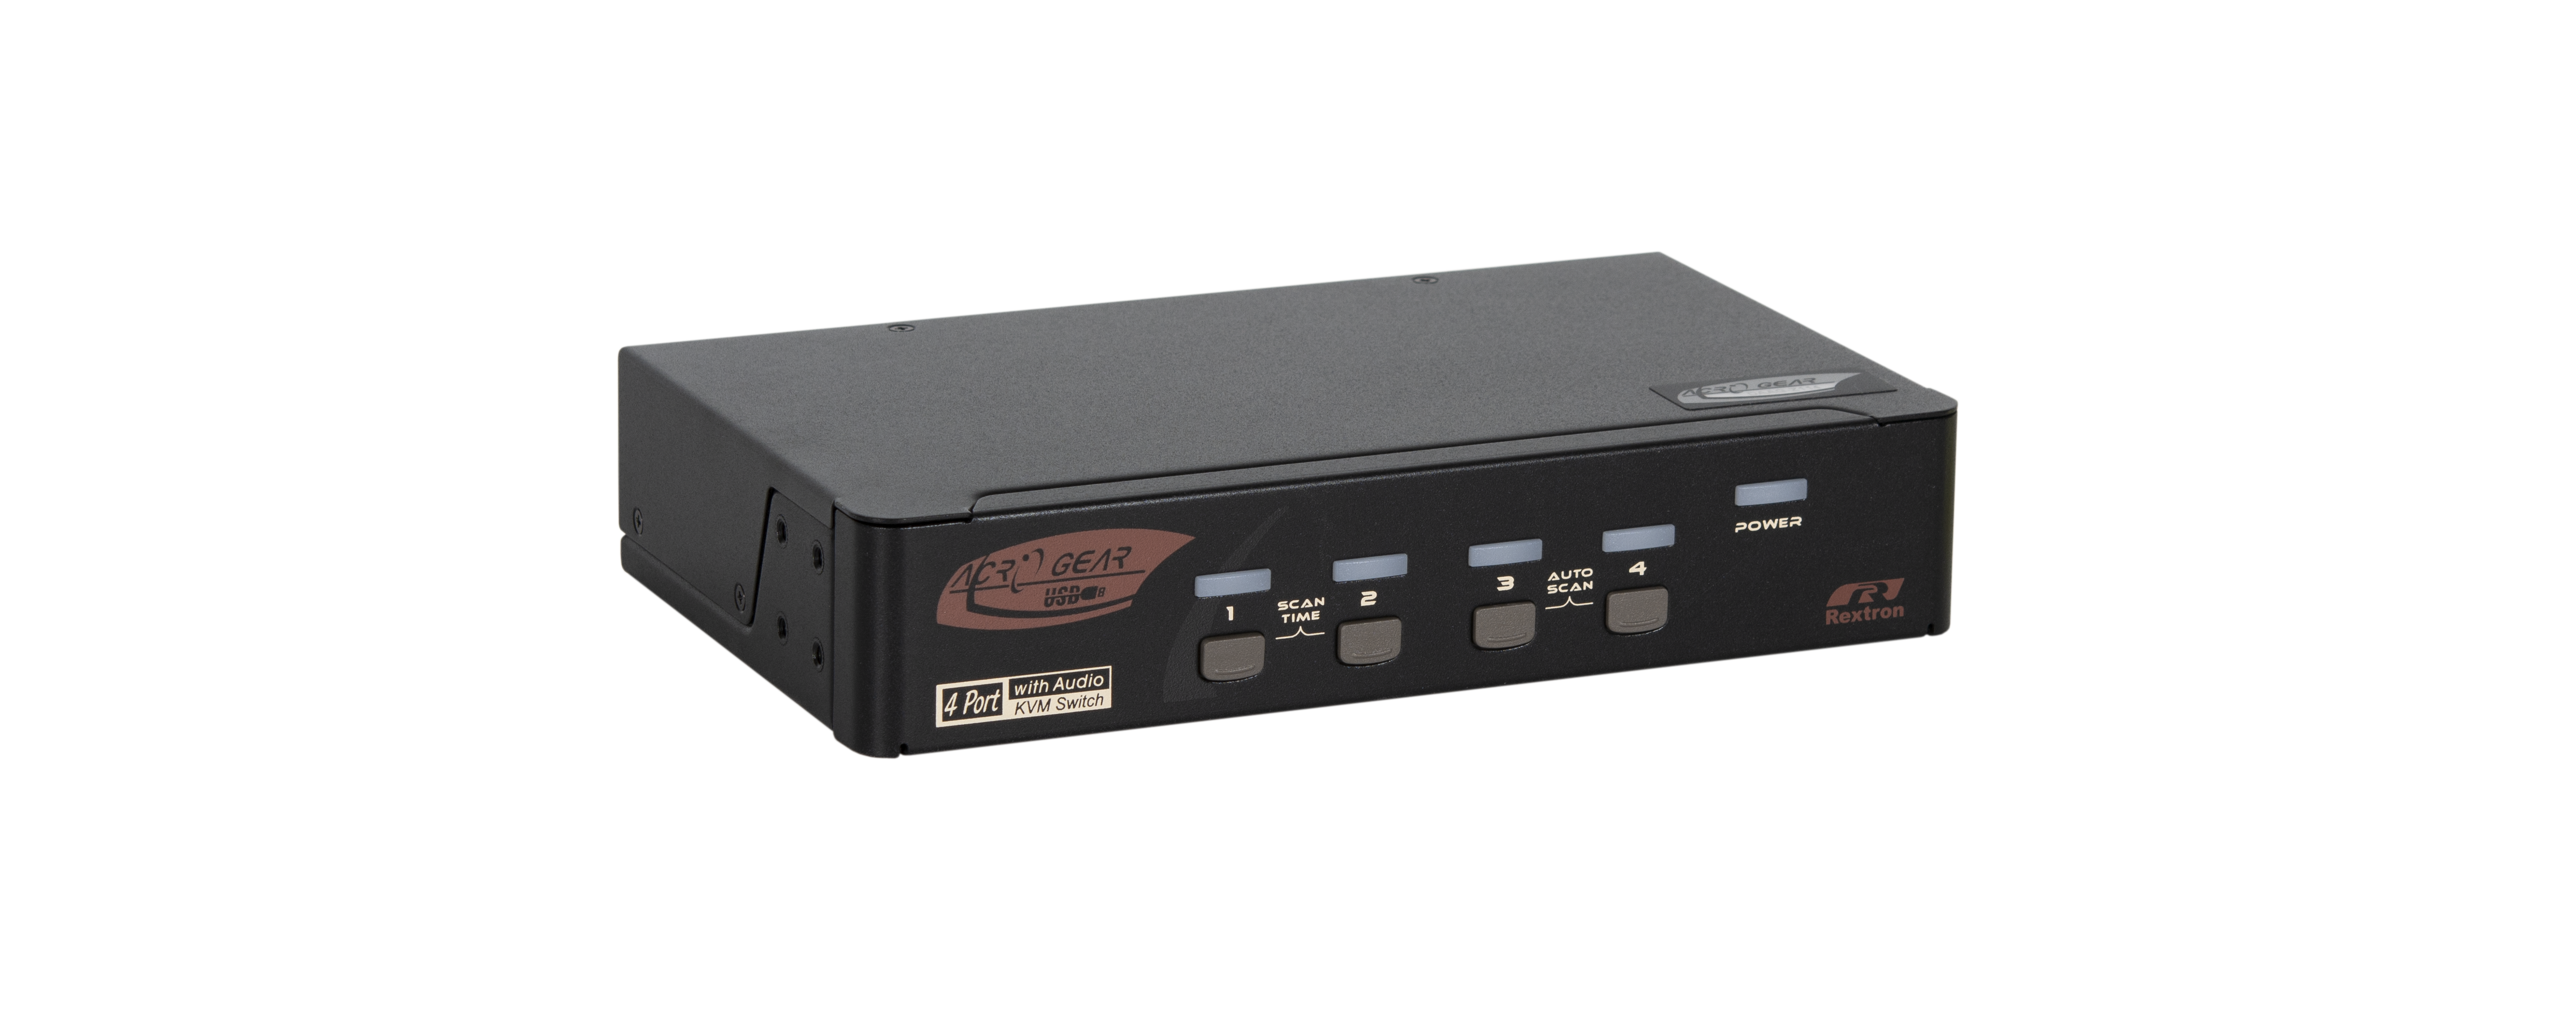 KVM-переключатель, 4-портовый, DVI, USB, аудио, USB-консоль (1920х1200)